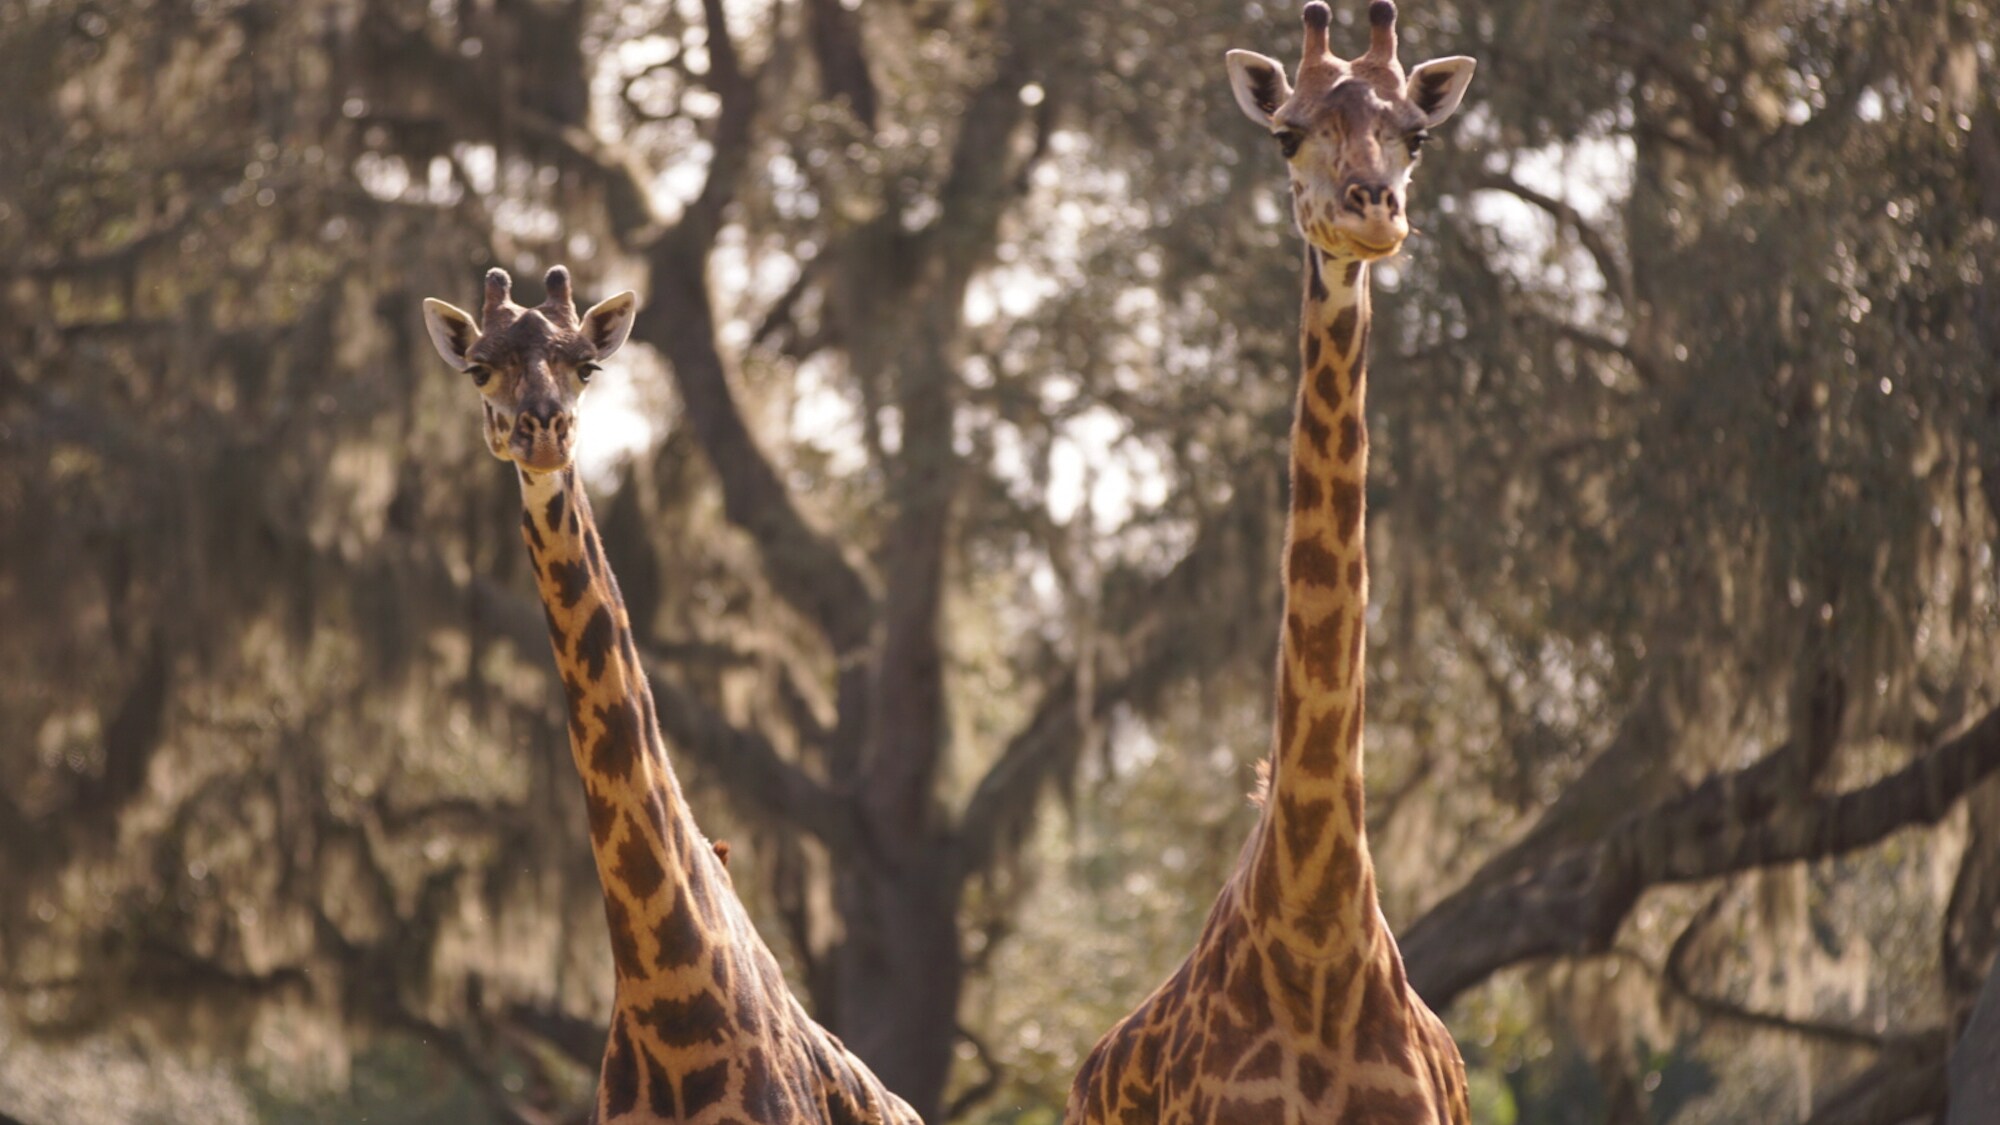 Masai giraffes on the savannah at the Kilimanjaro Safari. (Disney)